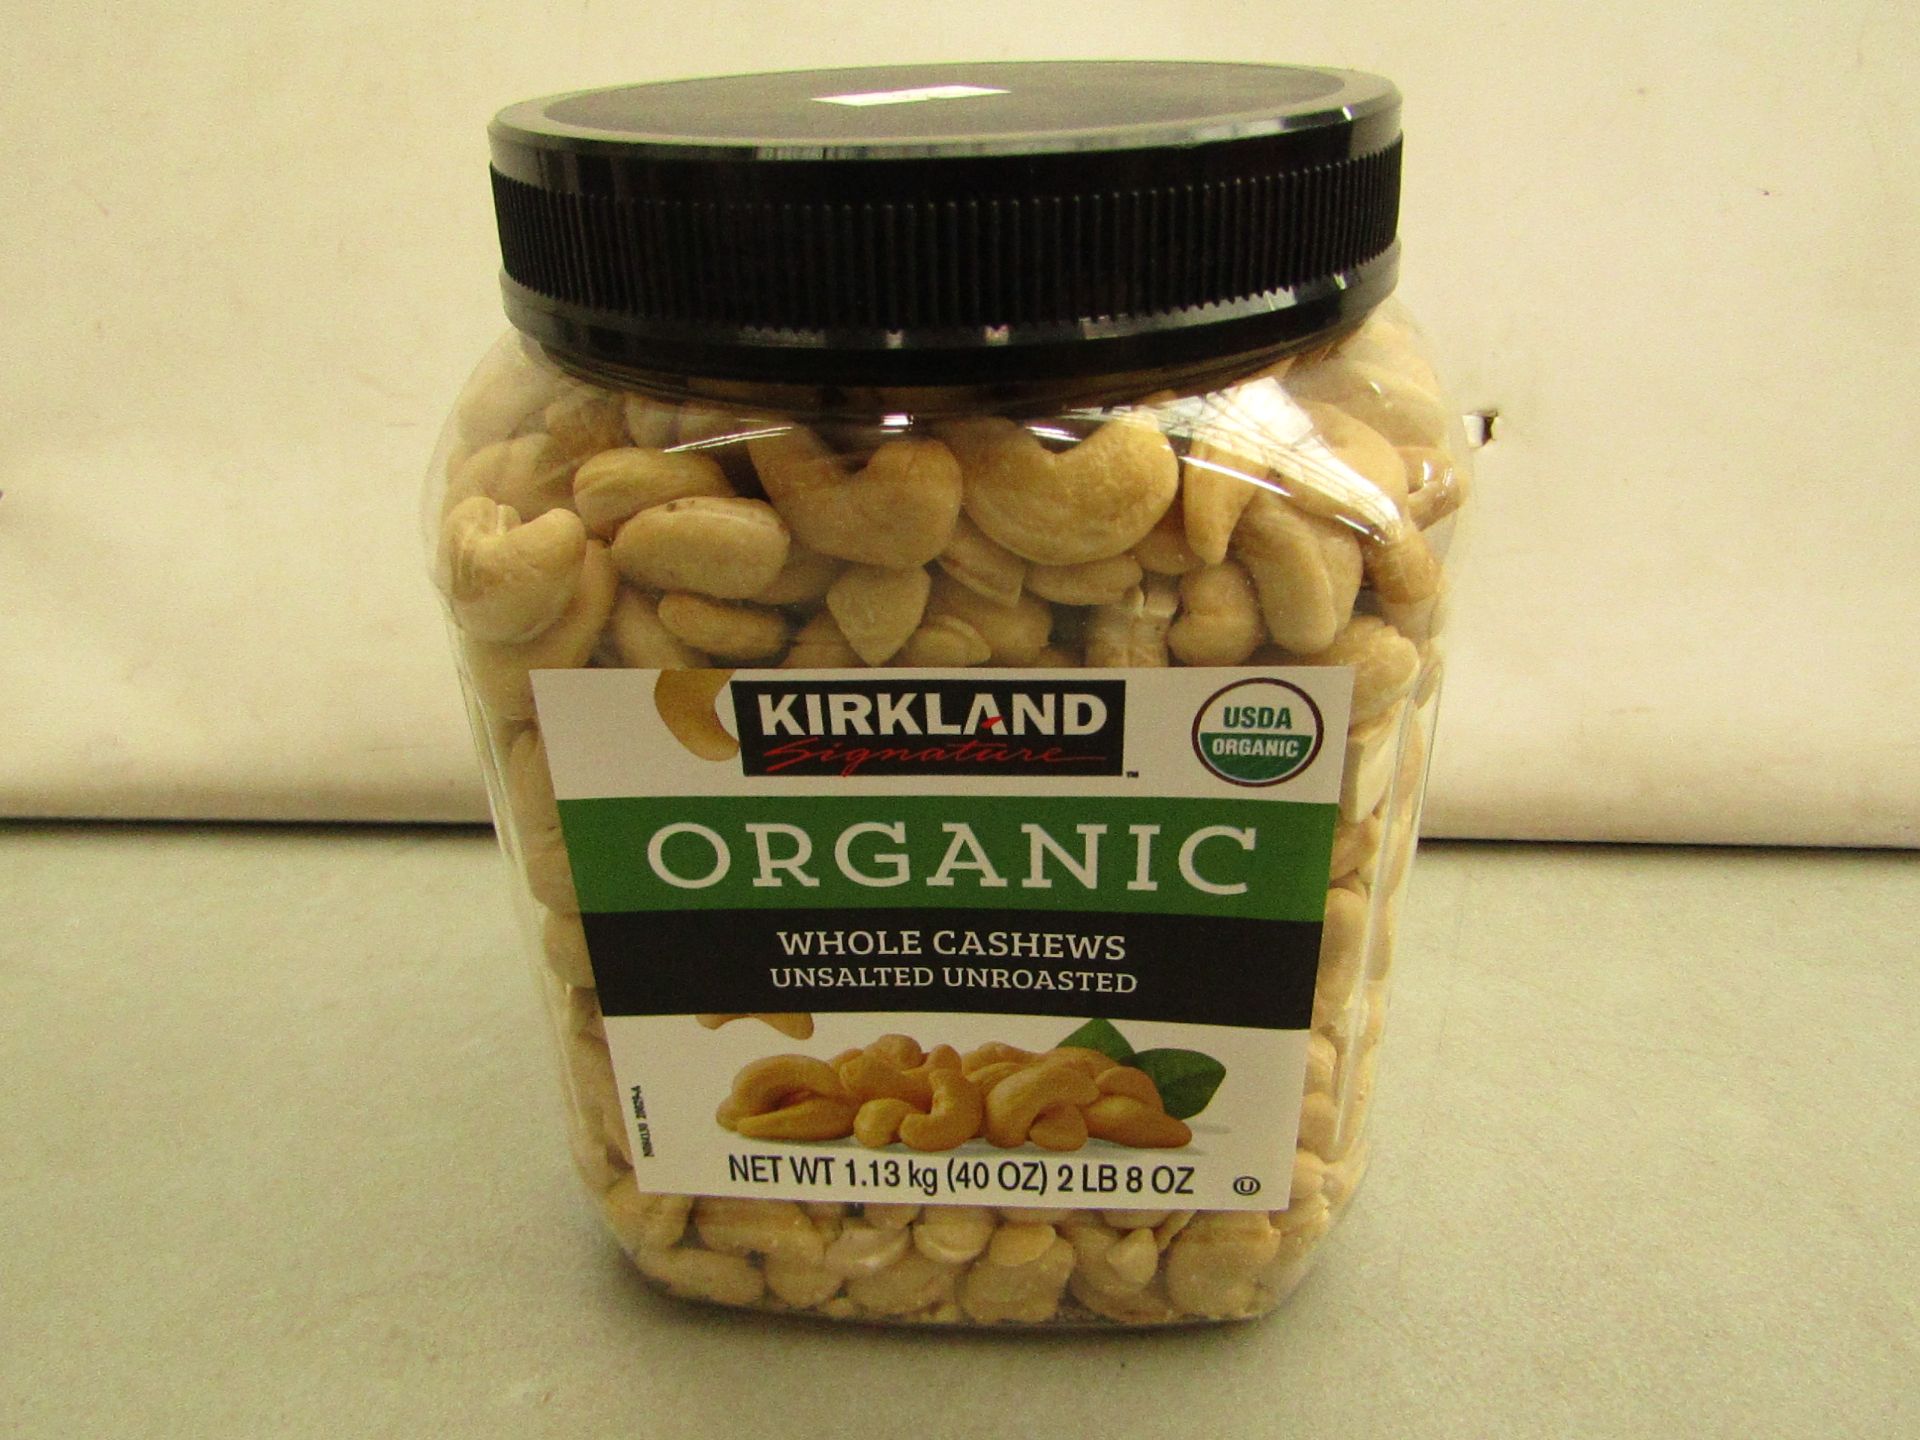 Kirkland Signature Organic Whole Cashew Nuts Unsalted 1.13kg BB Sep 19 still sealed.